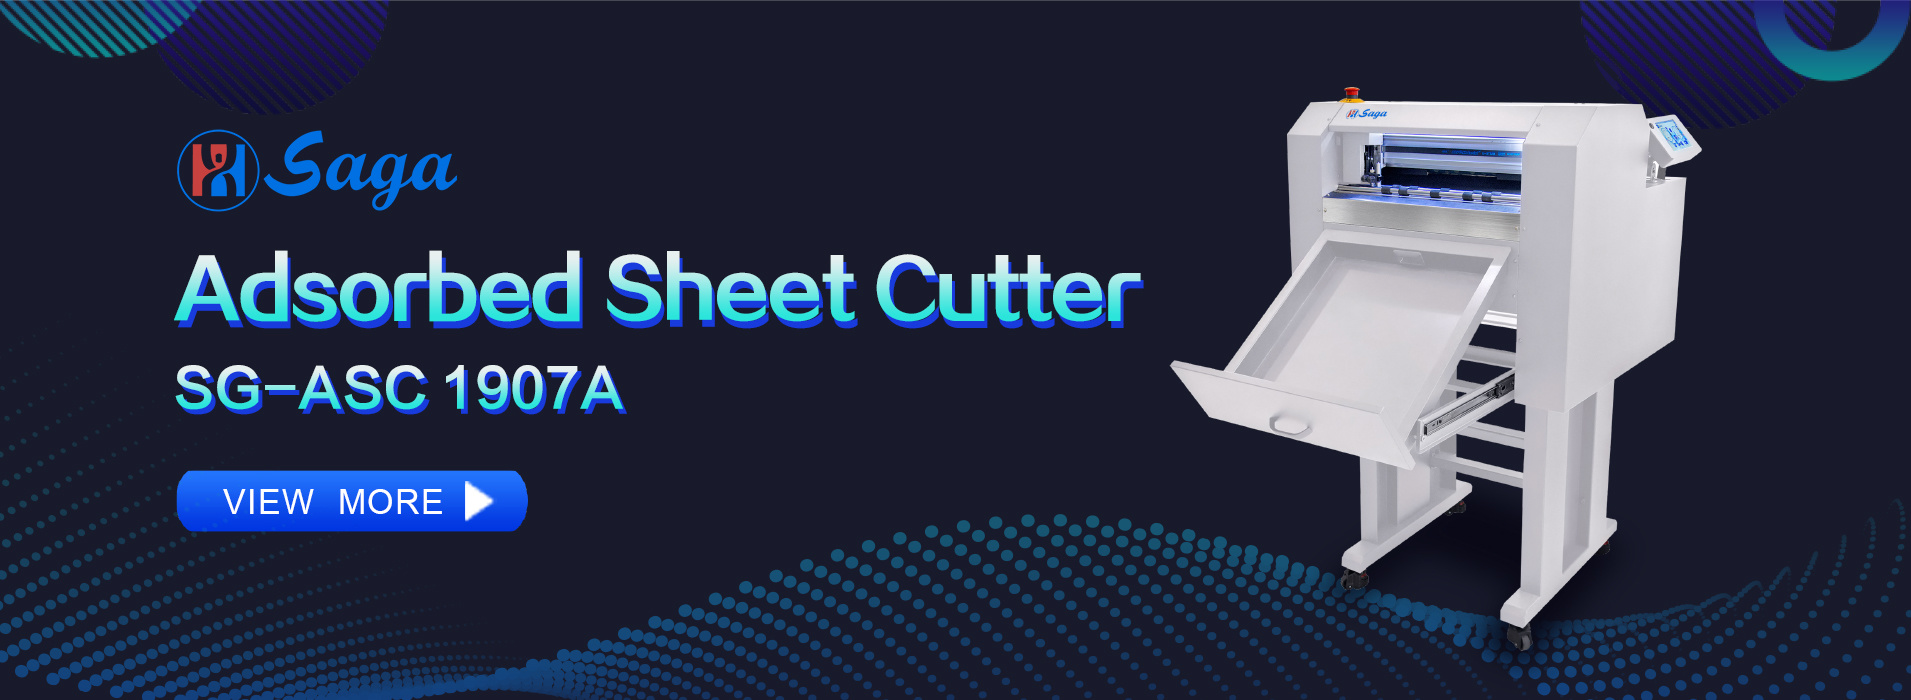 Adsorbed Sheet Cutter-SG-ASC 1907A